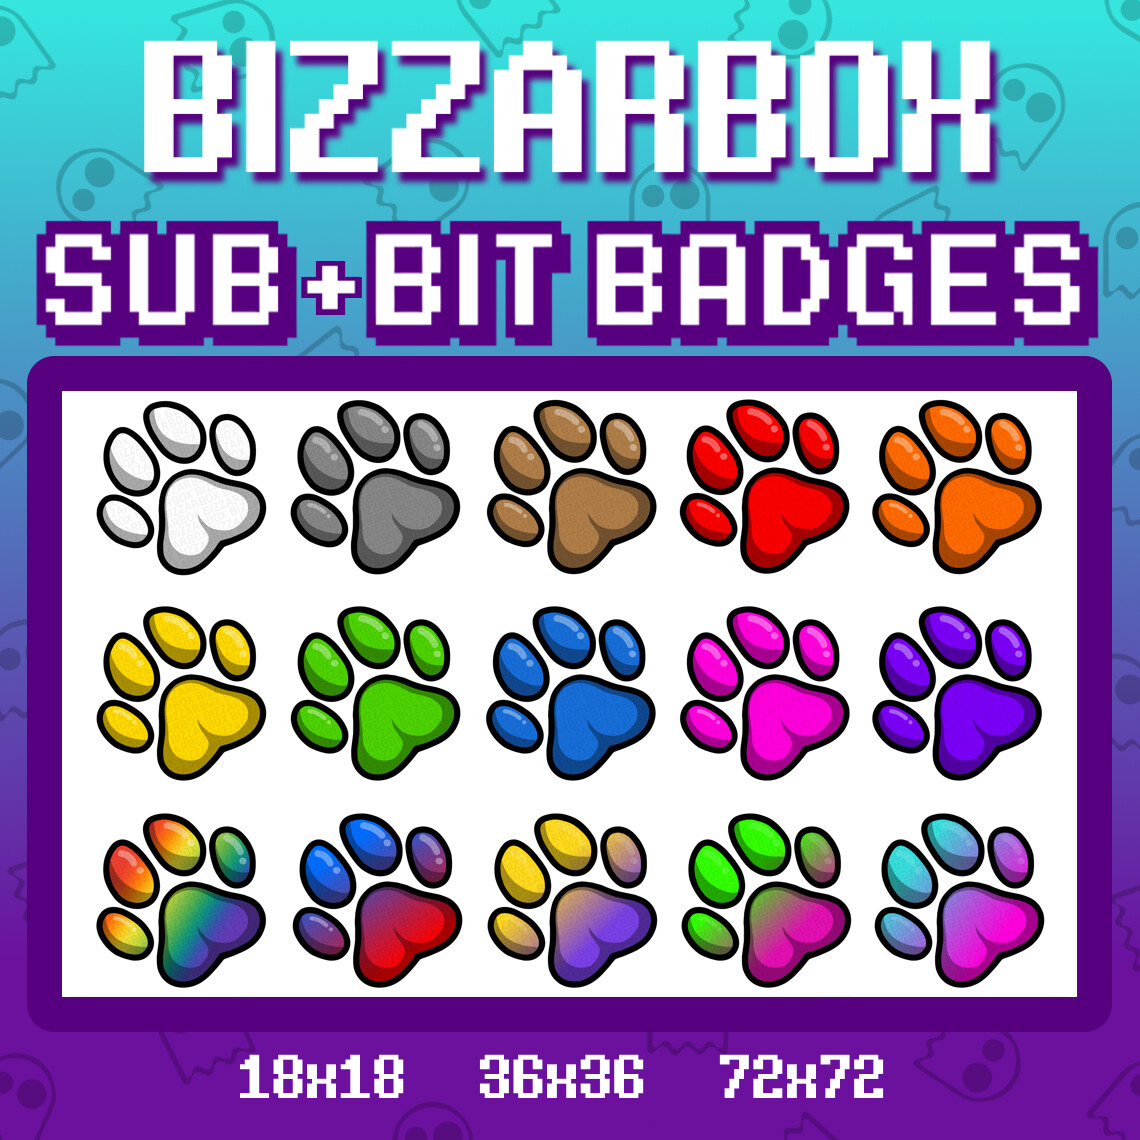 ArtStation - Twitch Sub Badges: Hot Dogs